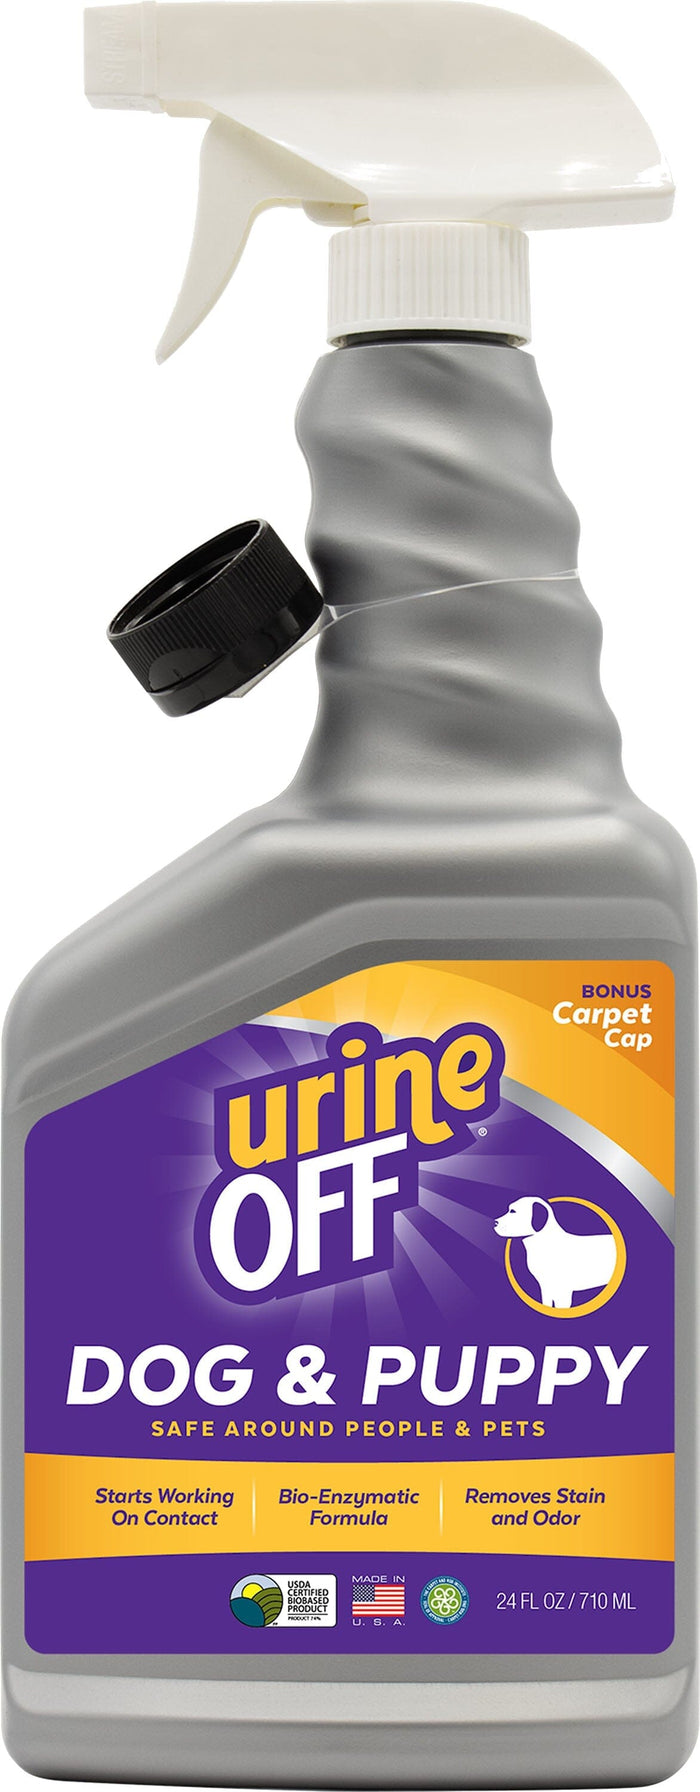 Urine Off Dog Hard Surface Spray-Carpet Applicator for Pets - 24 Oz